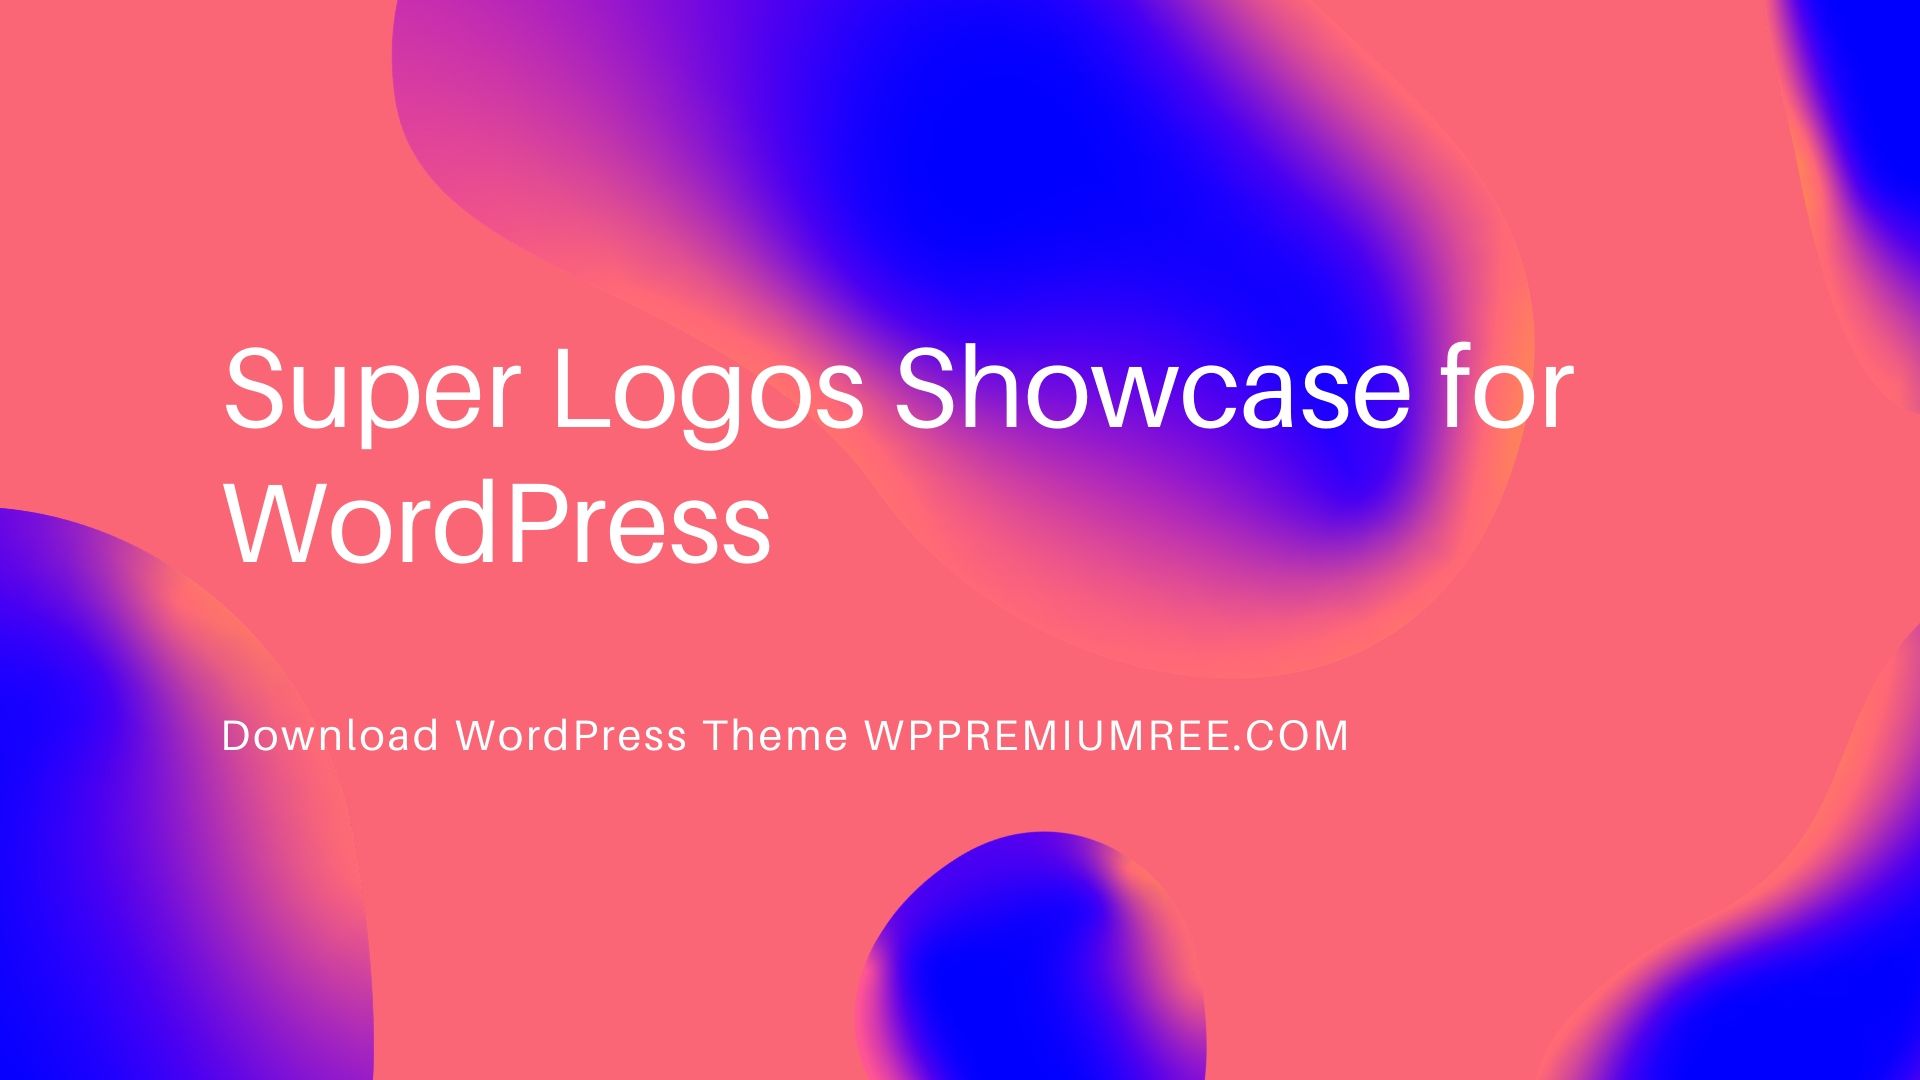 Super Logos for WordPress Showcase